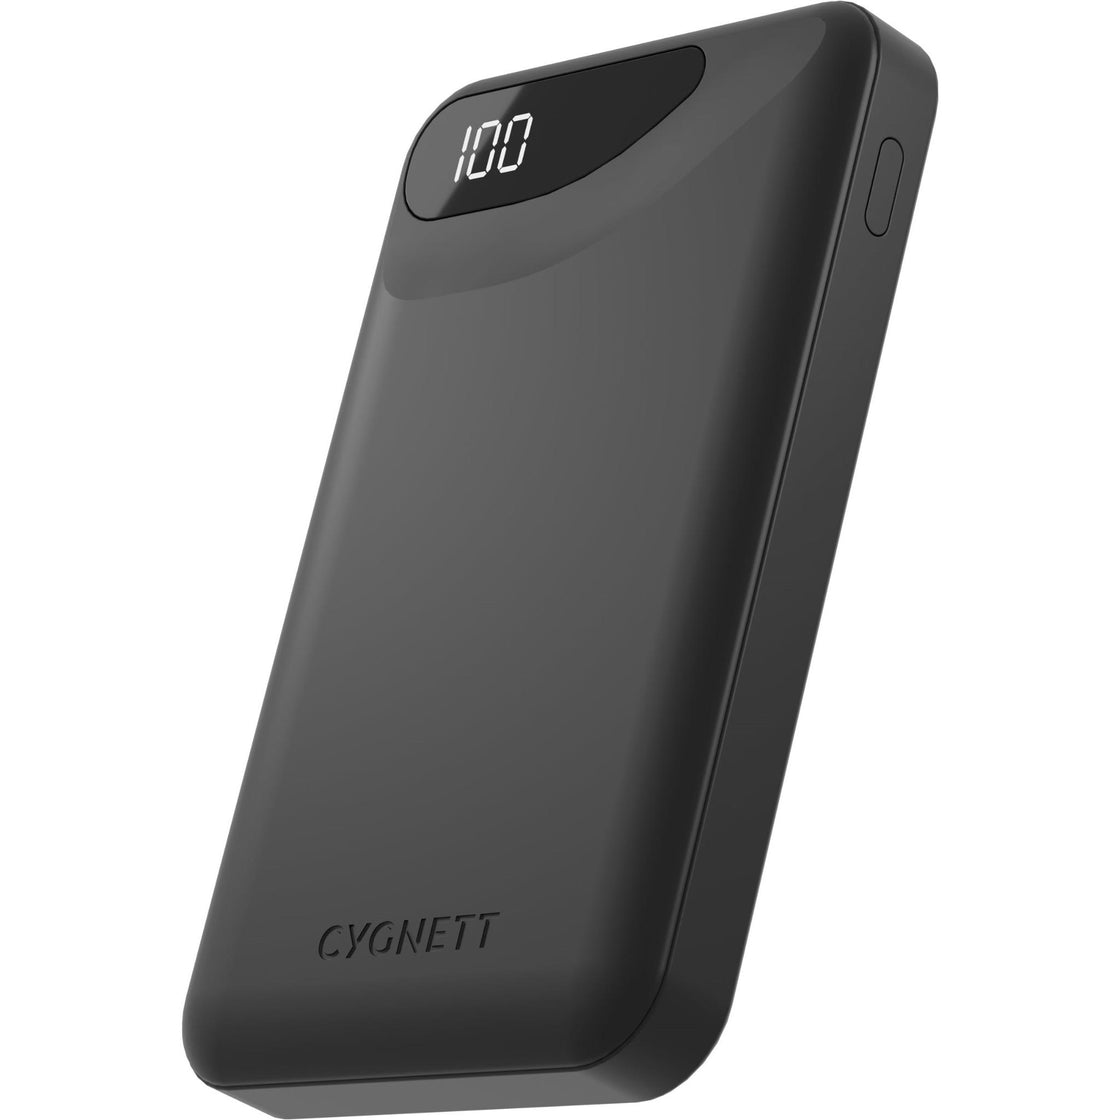 Cygnett ChargeUp Boost Gen3 10,000 mAh - Black Power Bank - Black